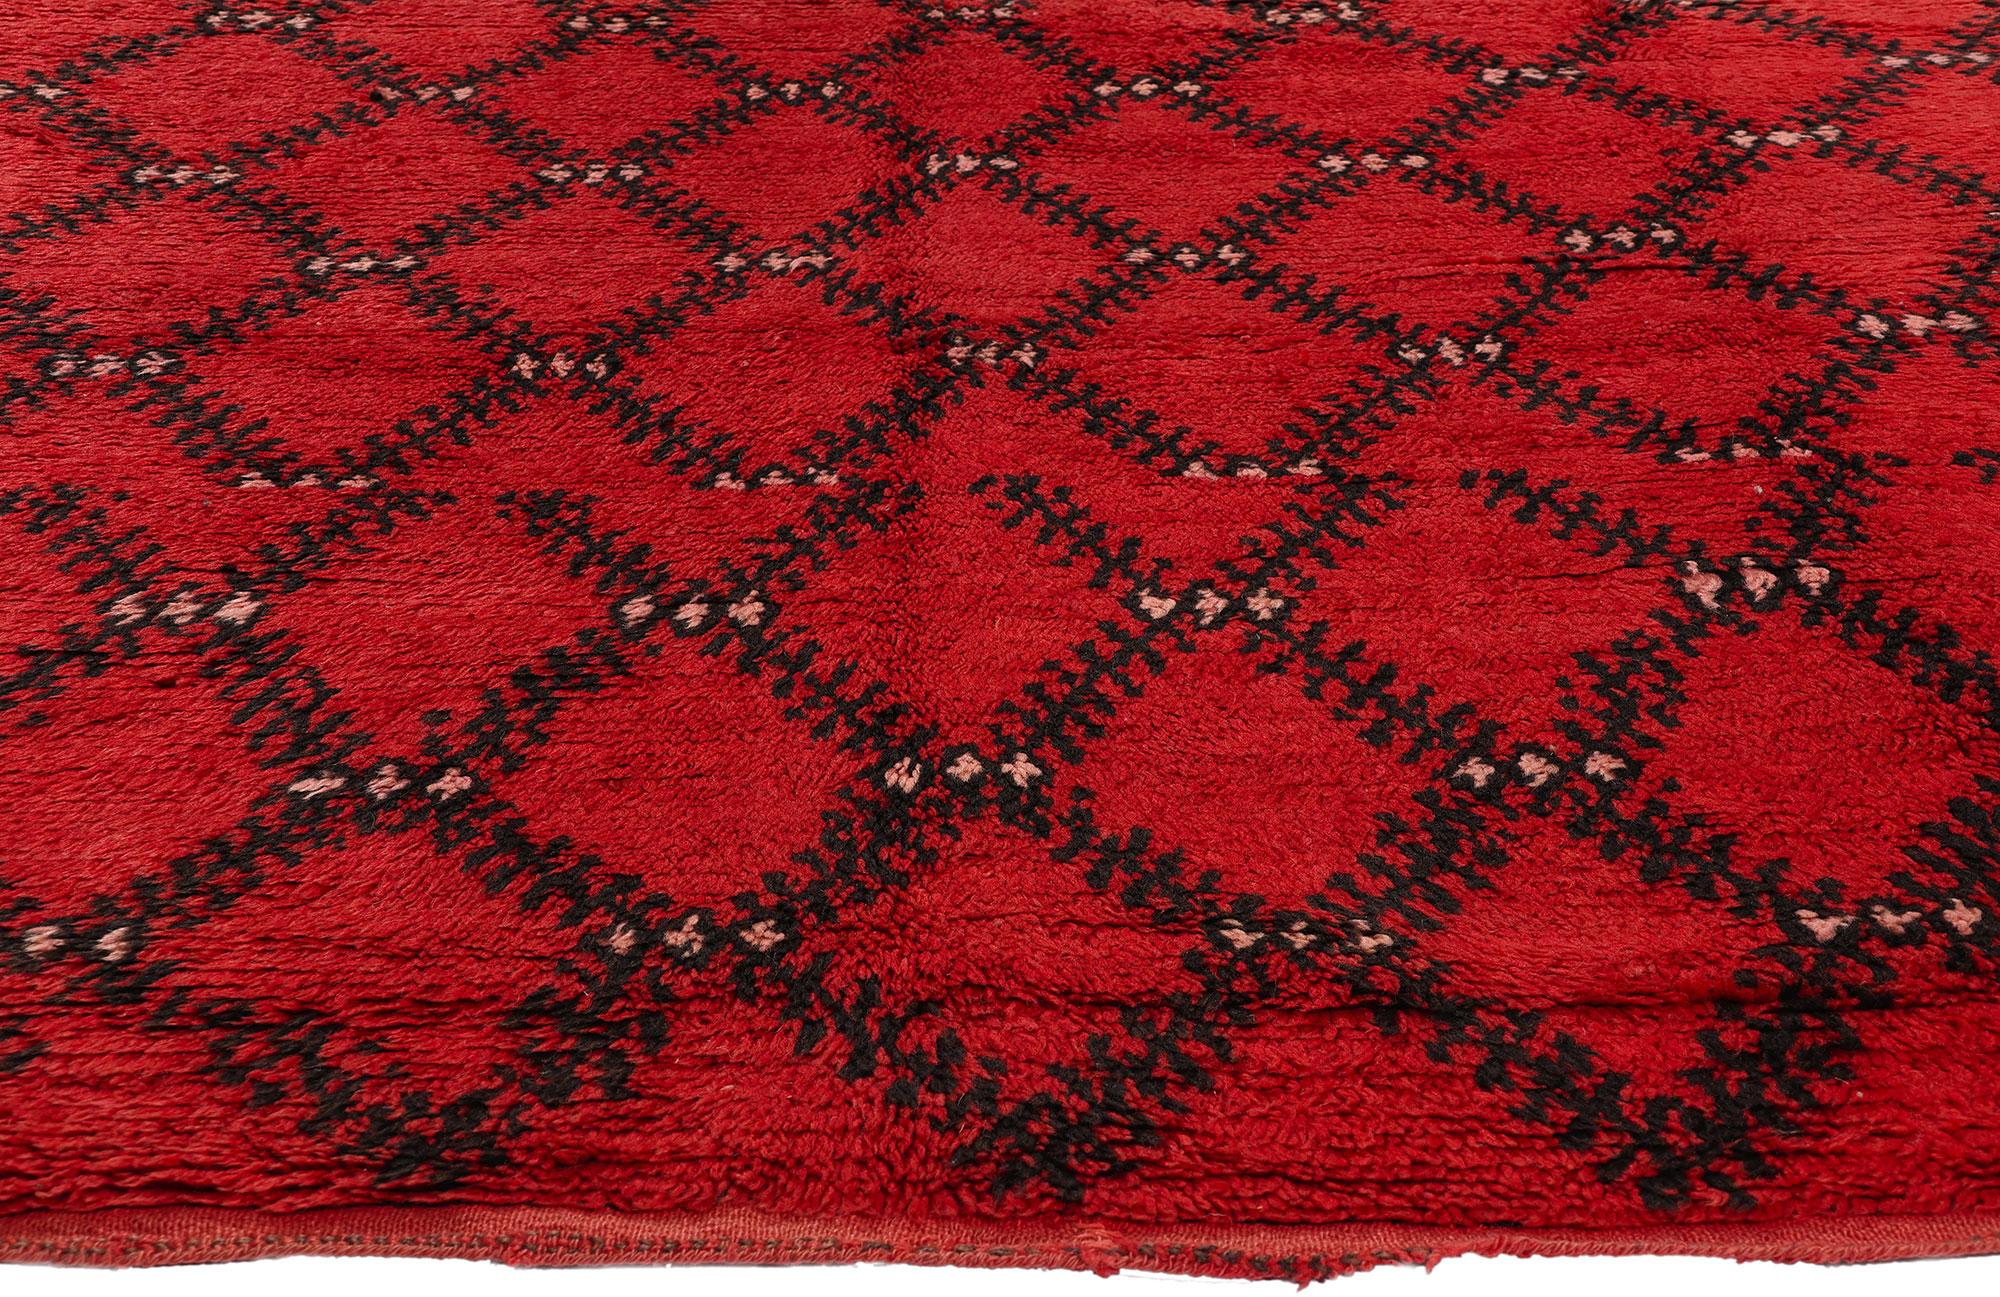 Hand-Knotted Vintage Red Beni Mrirt Moroccan Rug For Sale